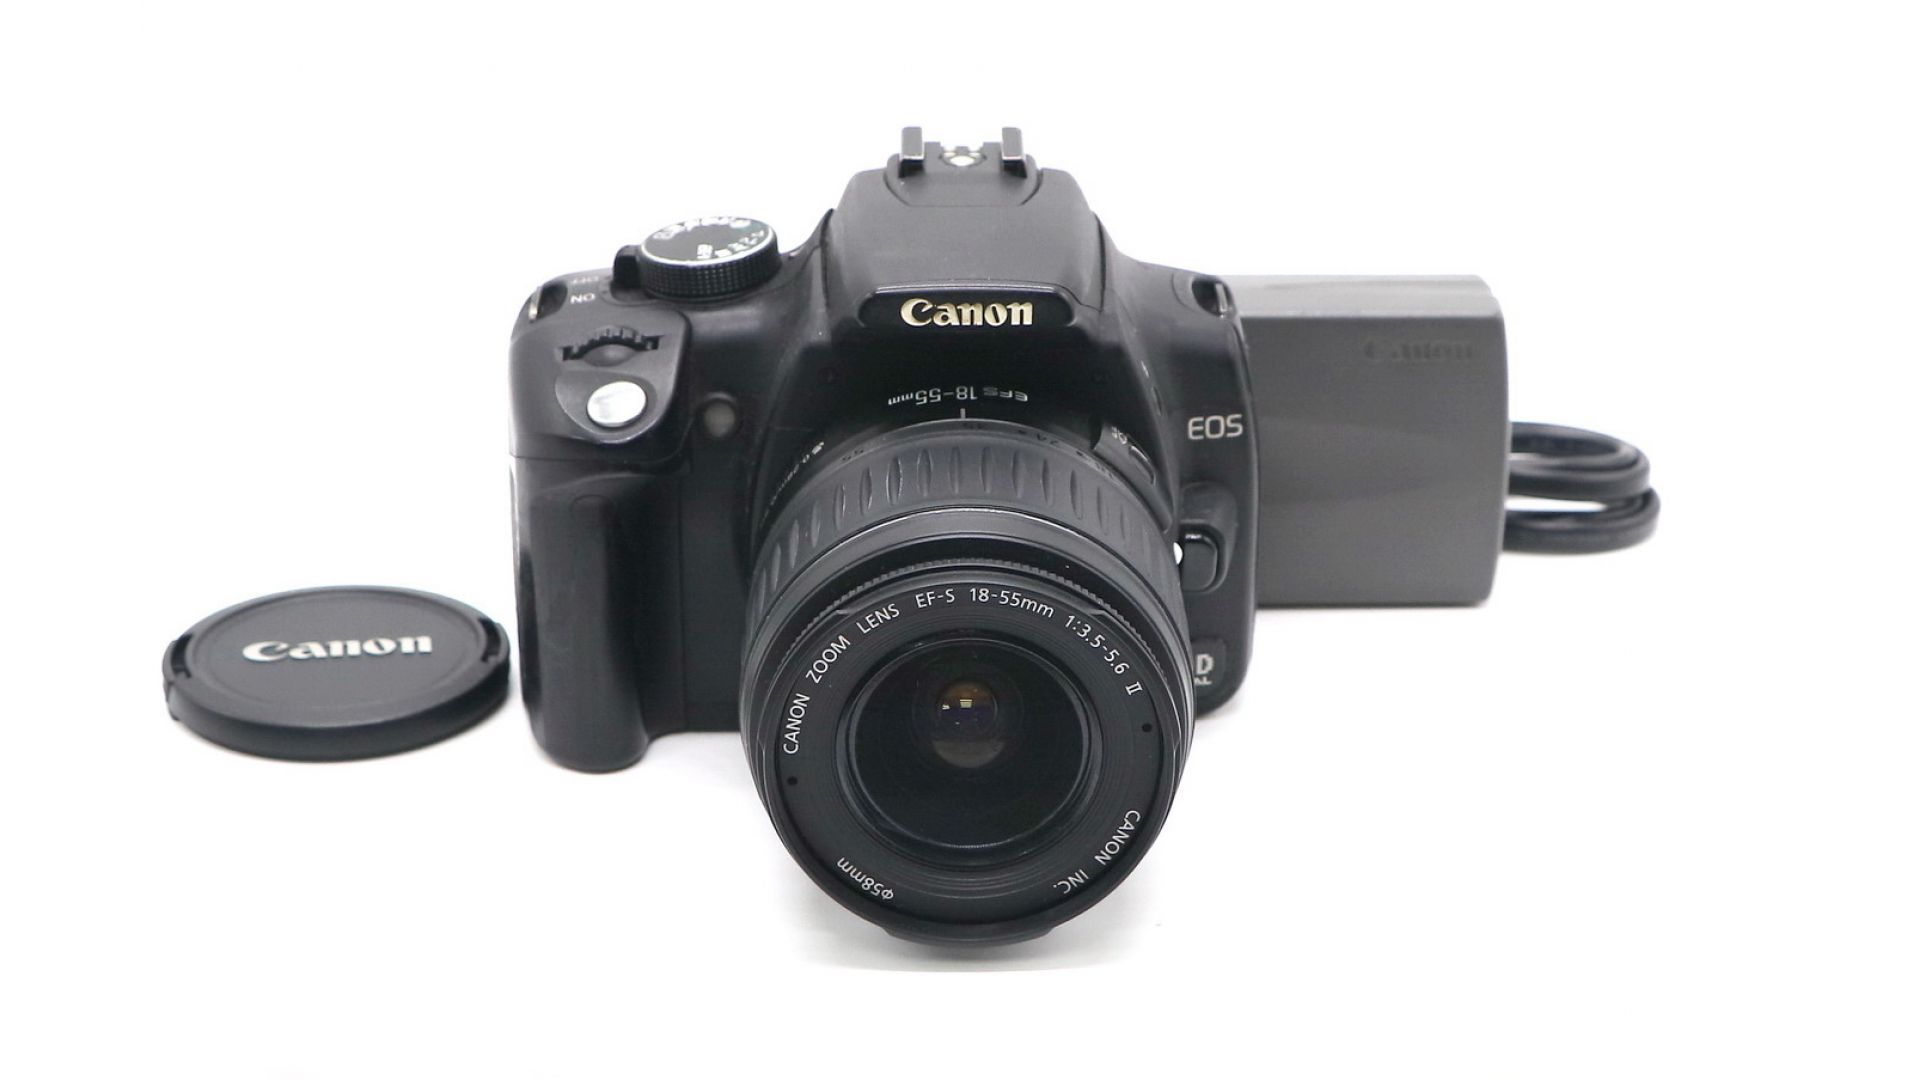 Canon EOS 350d in hands. Canon eos 350d